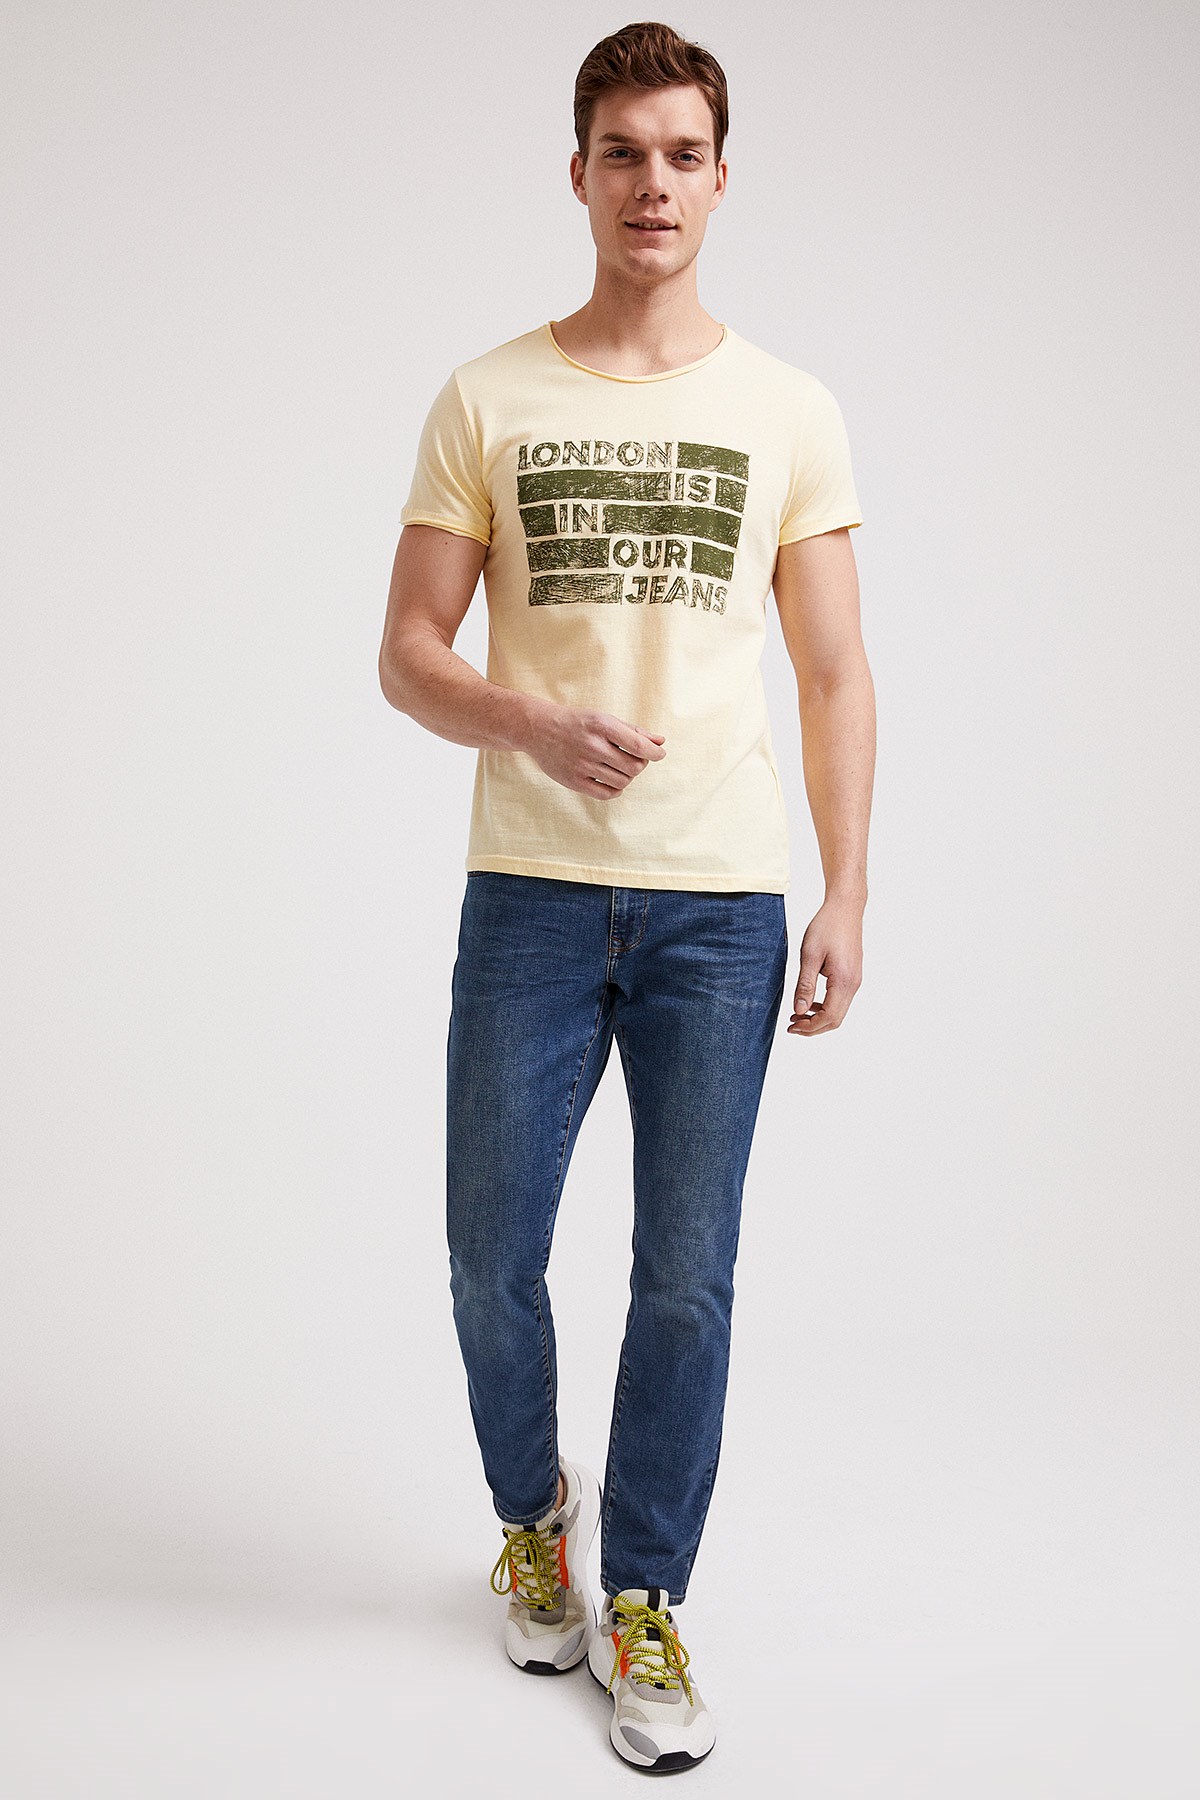 Lee Cooper Erkek T-Shirt 202 LCM 242019 Pastel Sarı